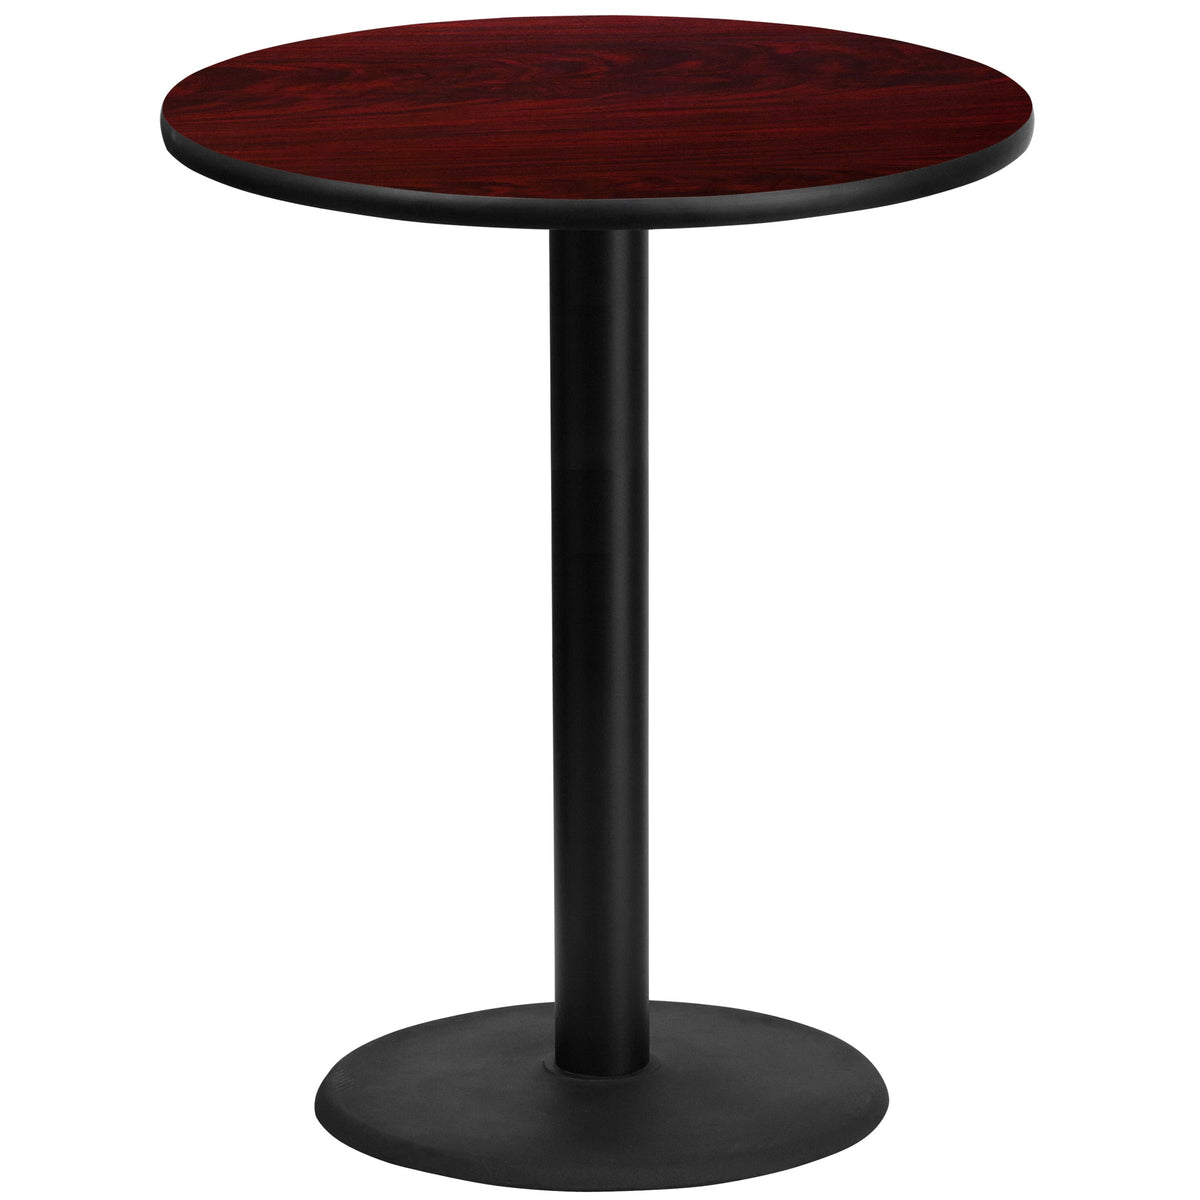 Mahogany |#| 36inch Round Mahogany Laminate Table Top with 24inch Round Bar Height Table Base